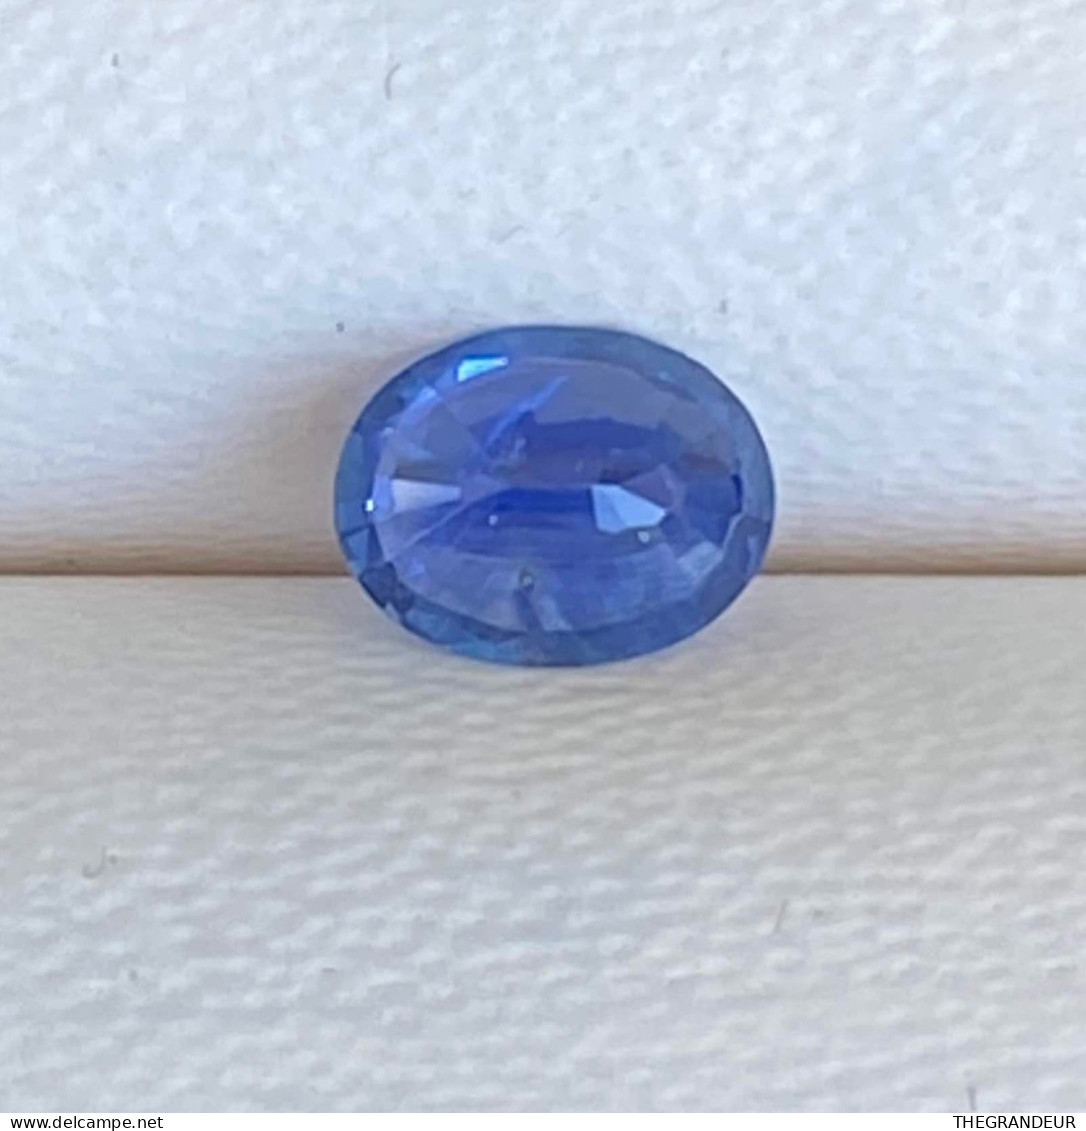 Natural Blue Sapphire Oval Cut 0.76 Carat From Sri Lanka - Saphir